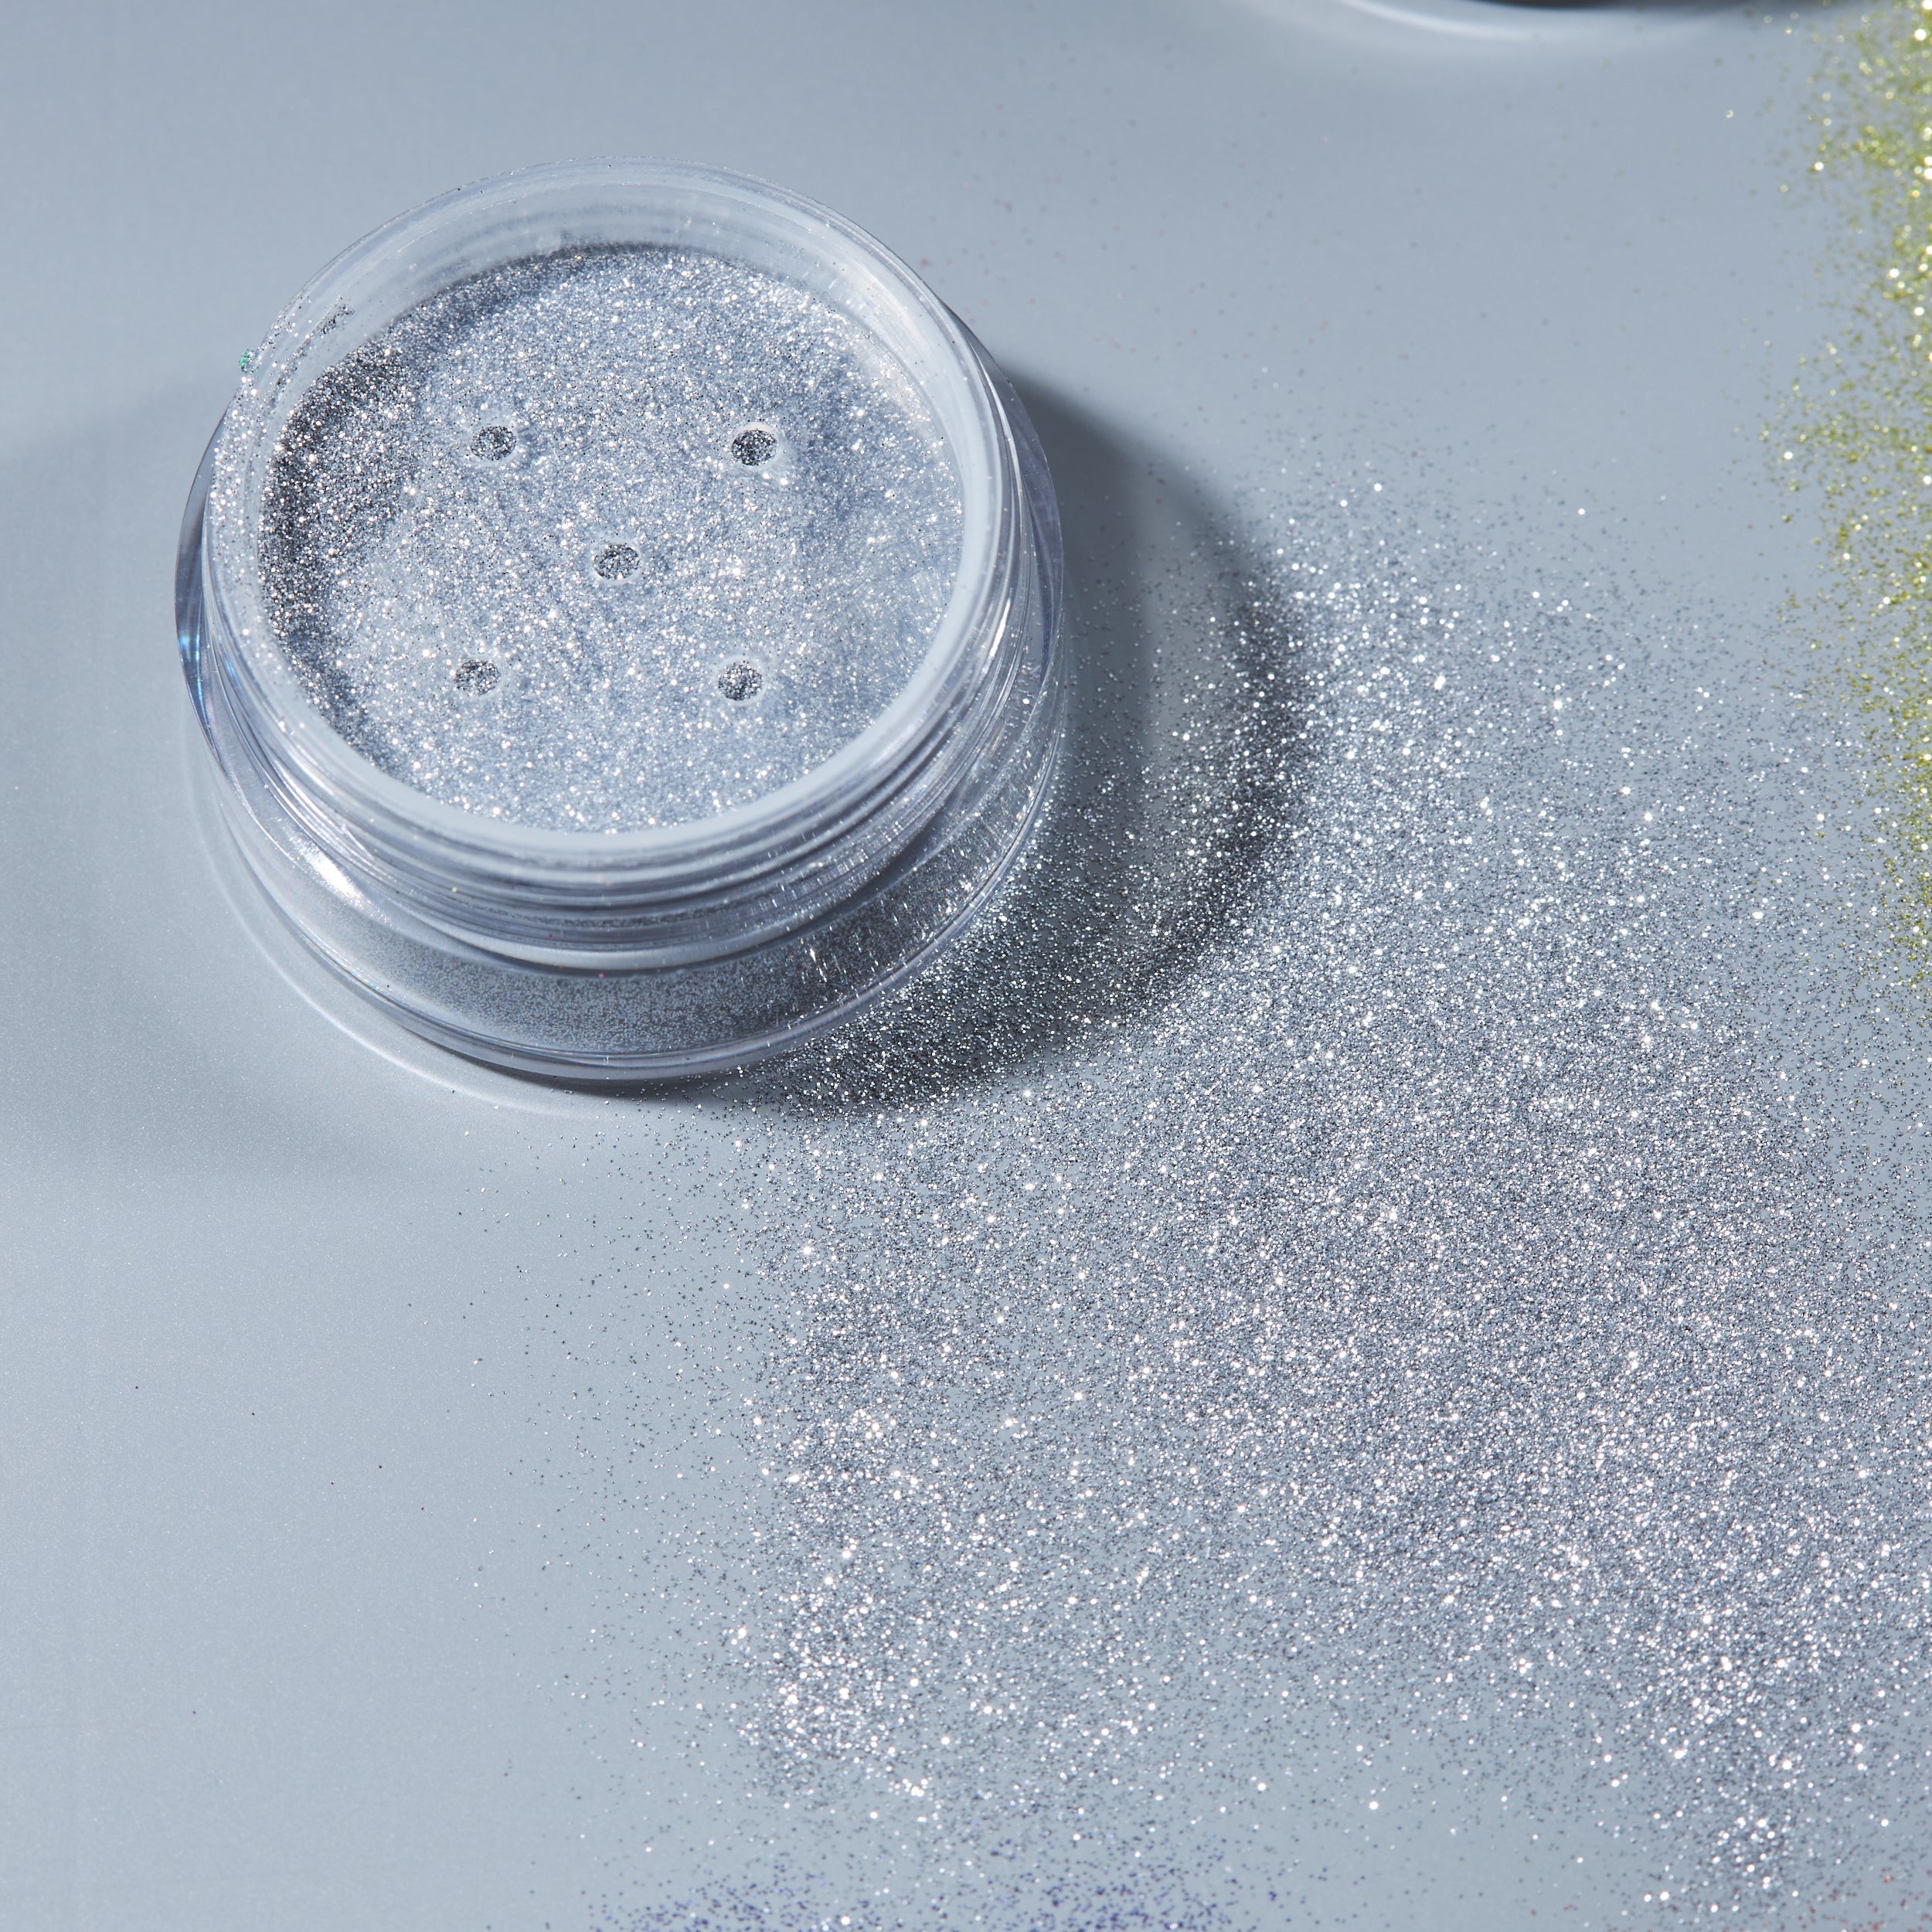 Classic Ultrafine Face & Body Glitter Dust. Cosmetically certified, FDA & Health Canada compliant, cruelty free and vegan.